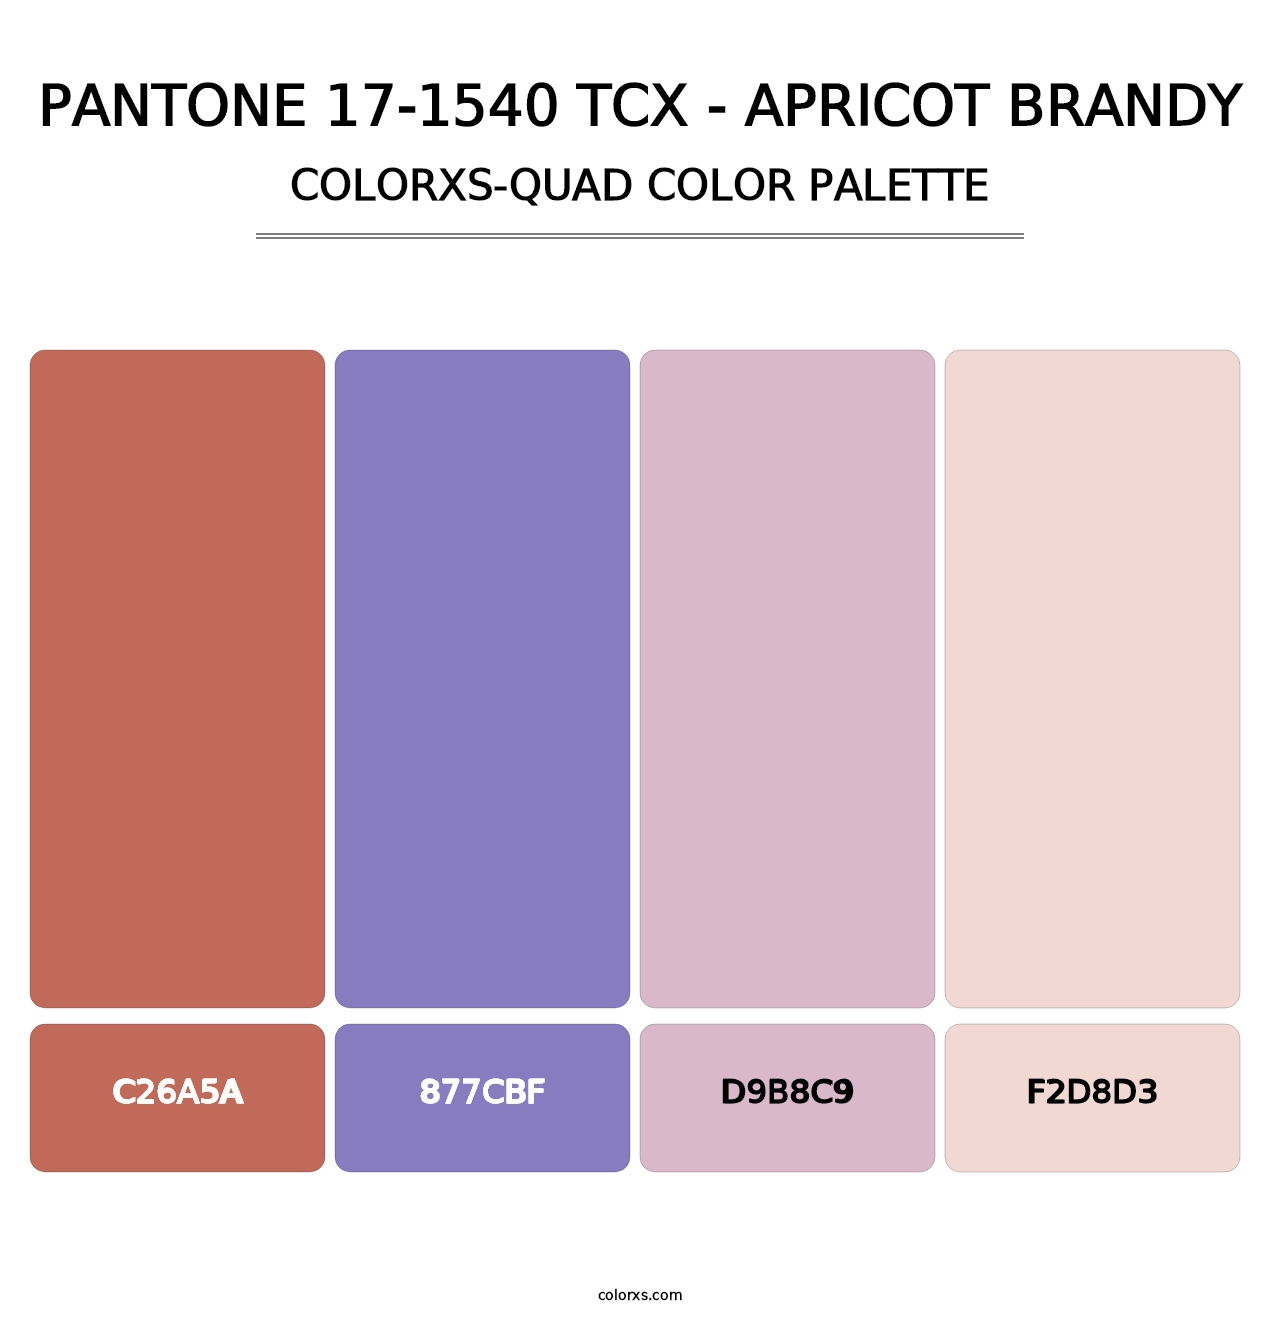 PANTONE 17-1540 TCX - Apricot Brandy - Colorxs Quad Palette